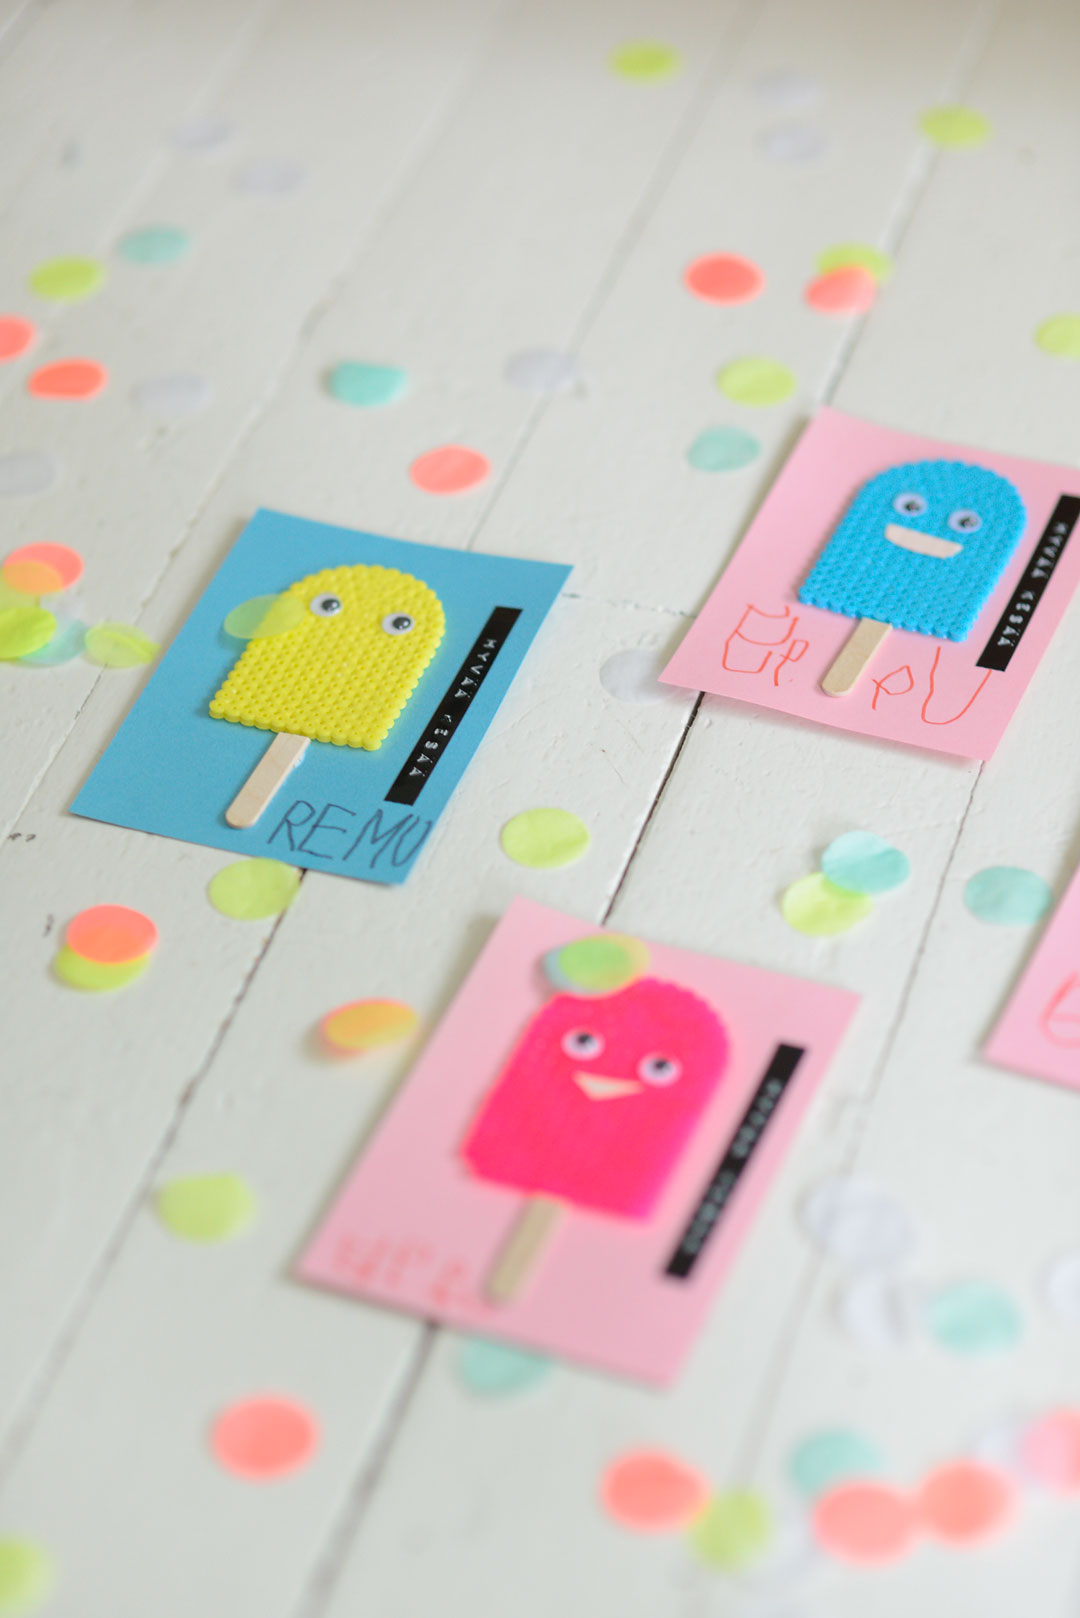 Fun DIY Hama bead popsicle greeting cards